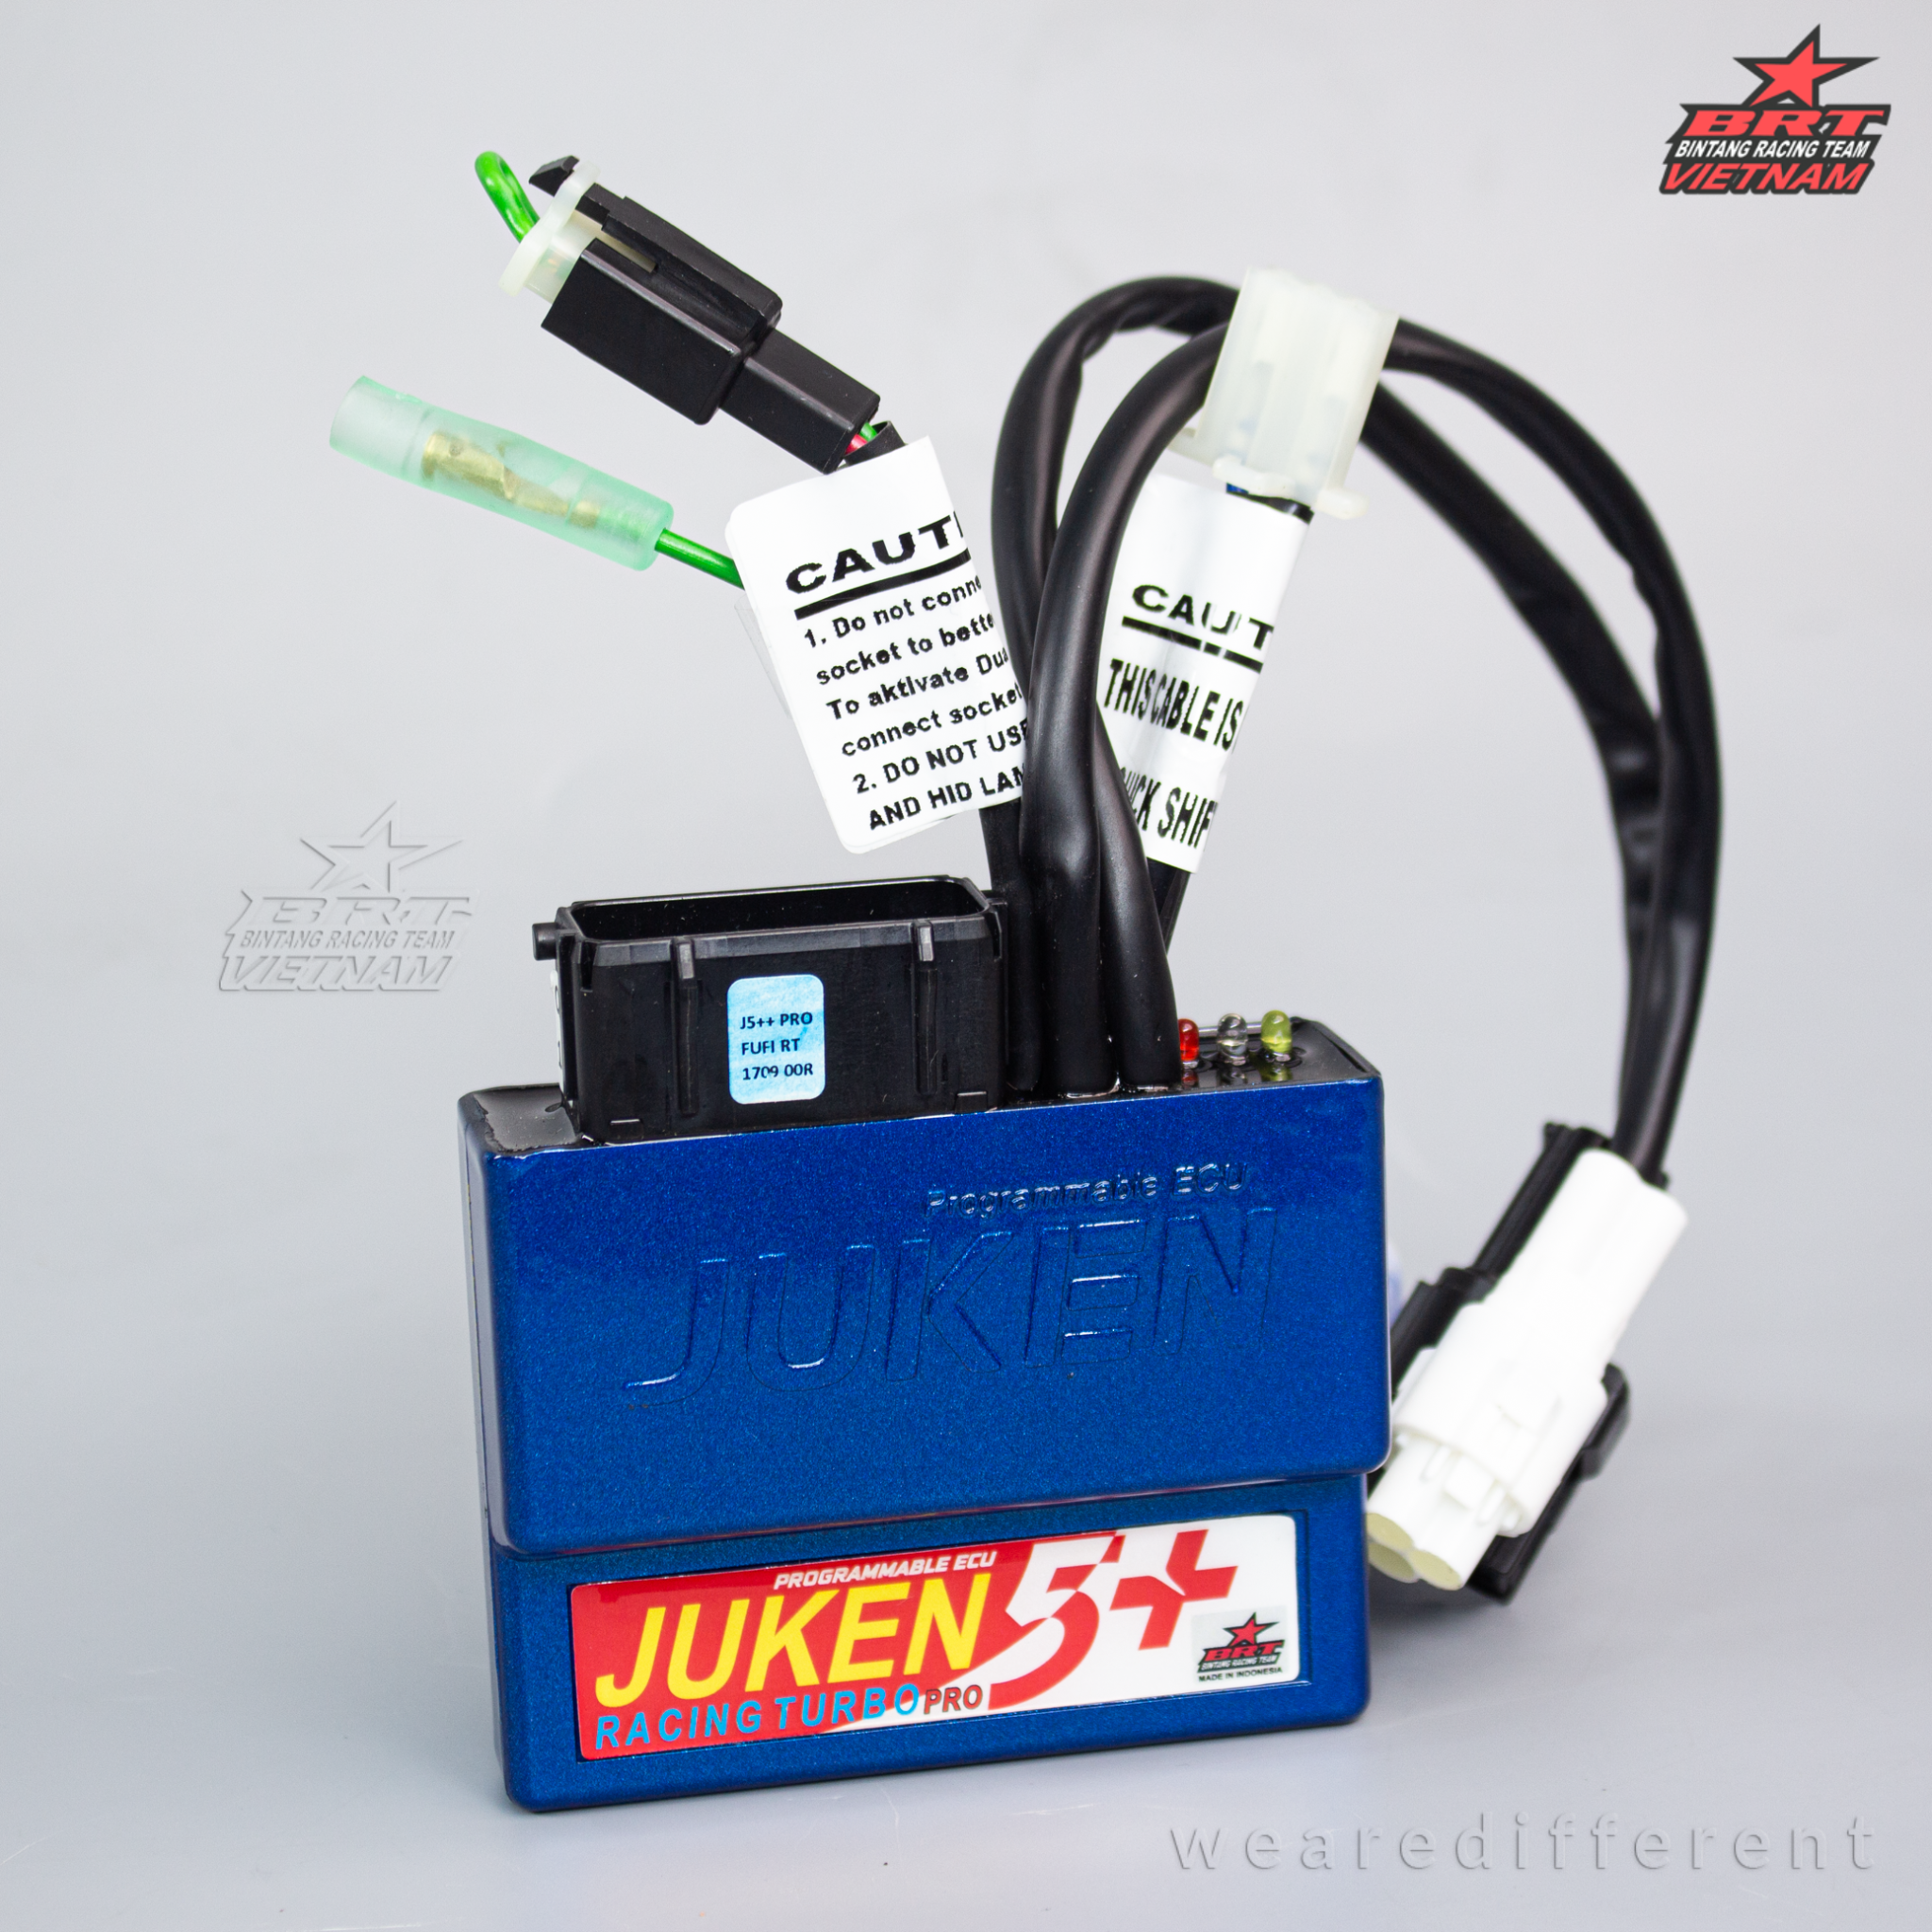  ECU Juken 5++ Pro Turbo Ex155 VVA Smartkey 